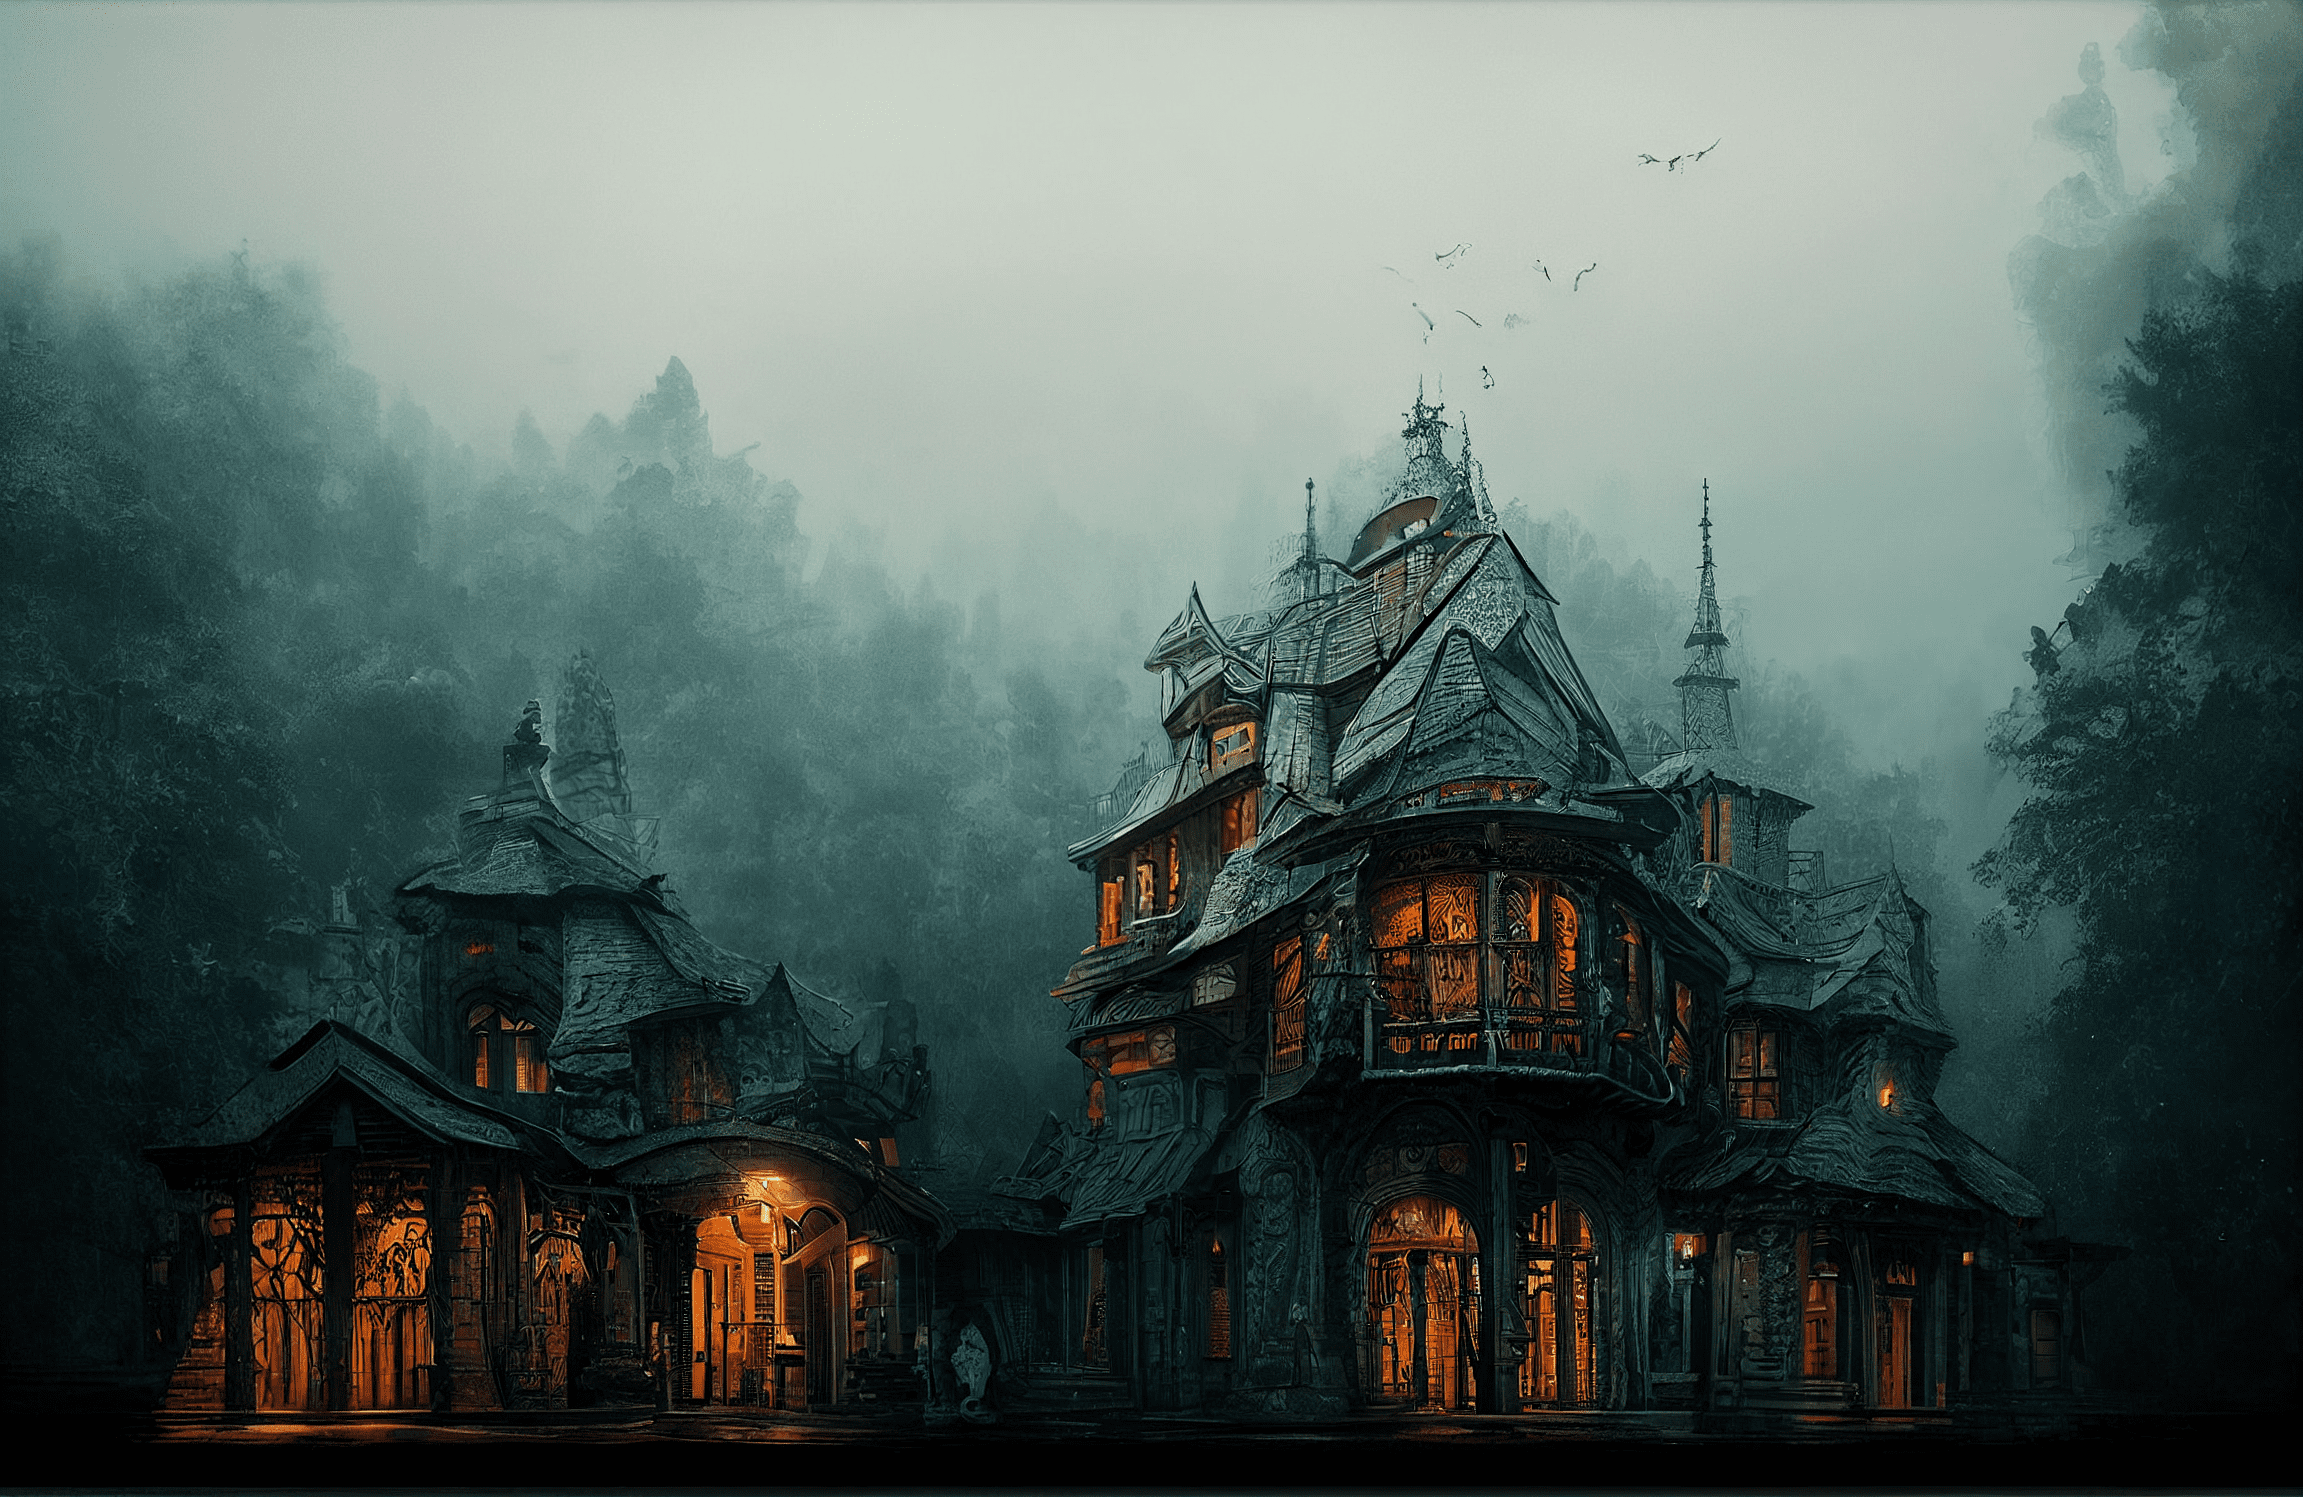 I strive just to say I’m alright – Aquapunk gloomy gothic mansion